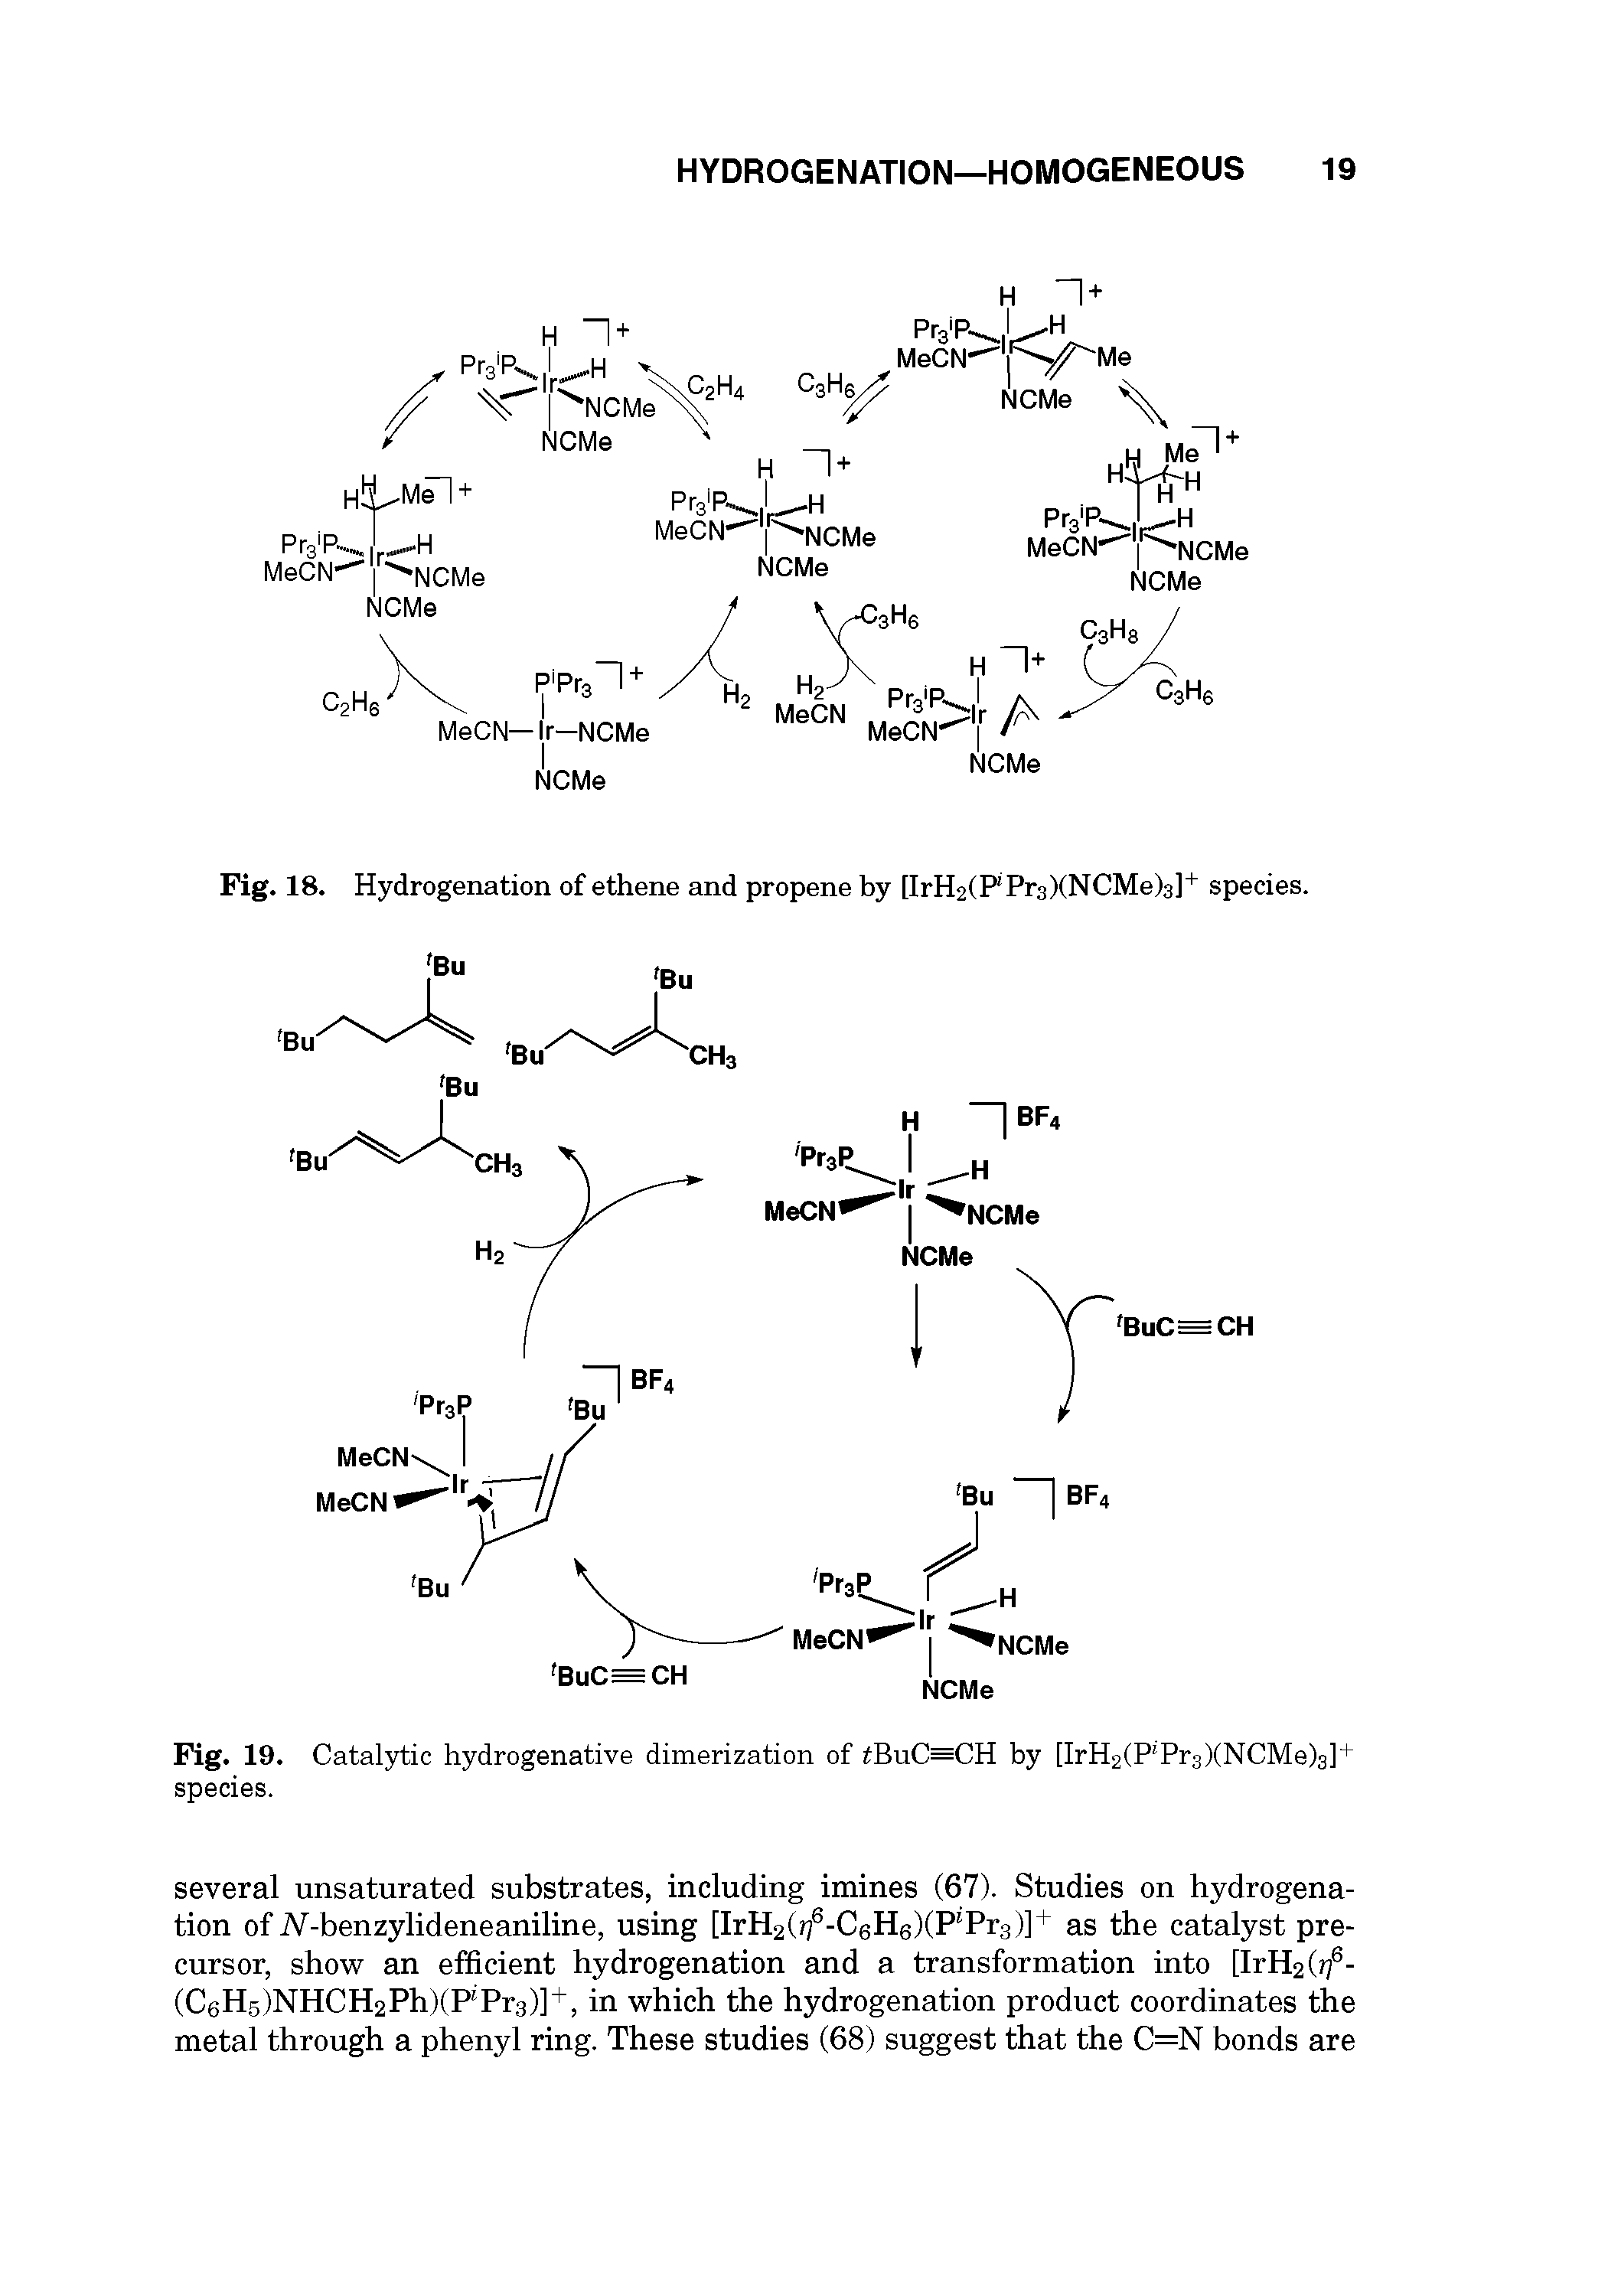 Fig. 19. Catalytic hydrogenative dimerization of tBuC=CH by [IrH2(P Pr3)(NCMe)3] species.